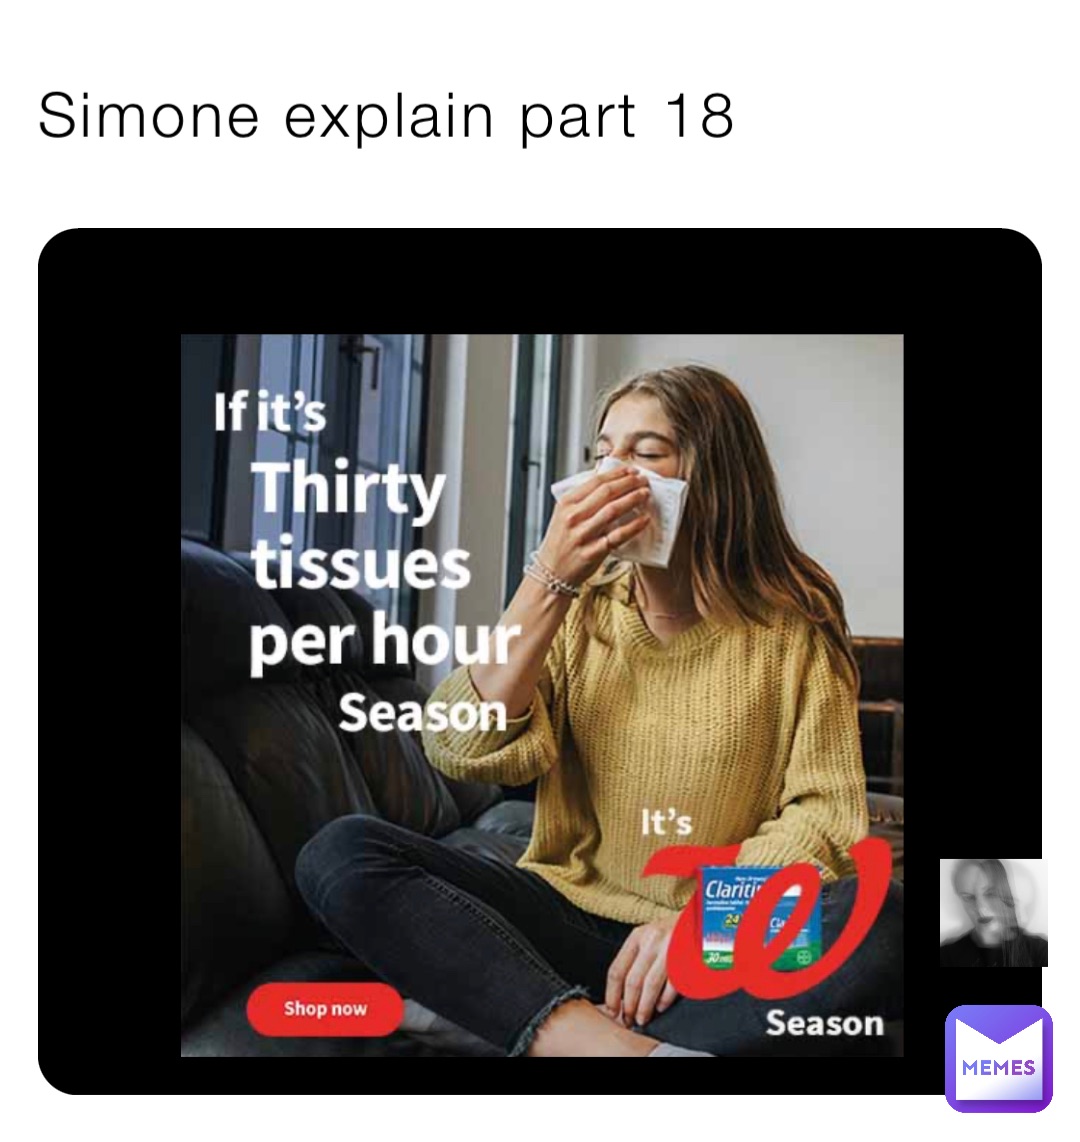 Simone explain part 18